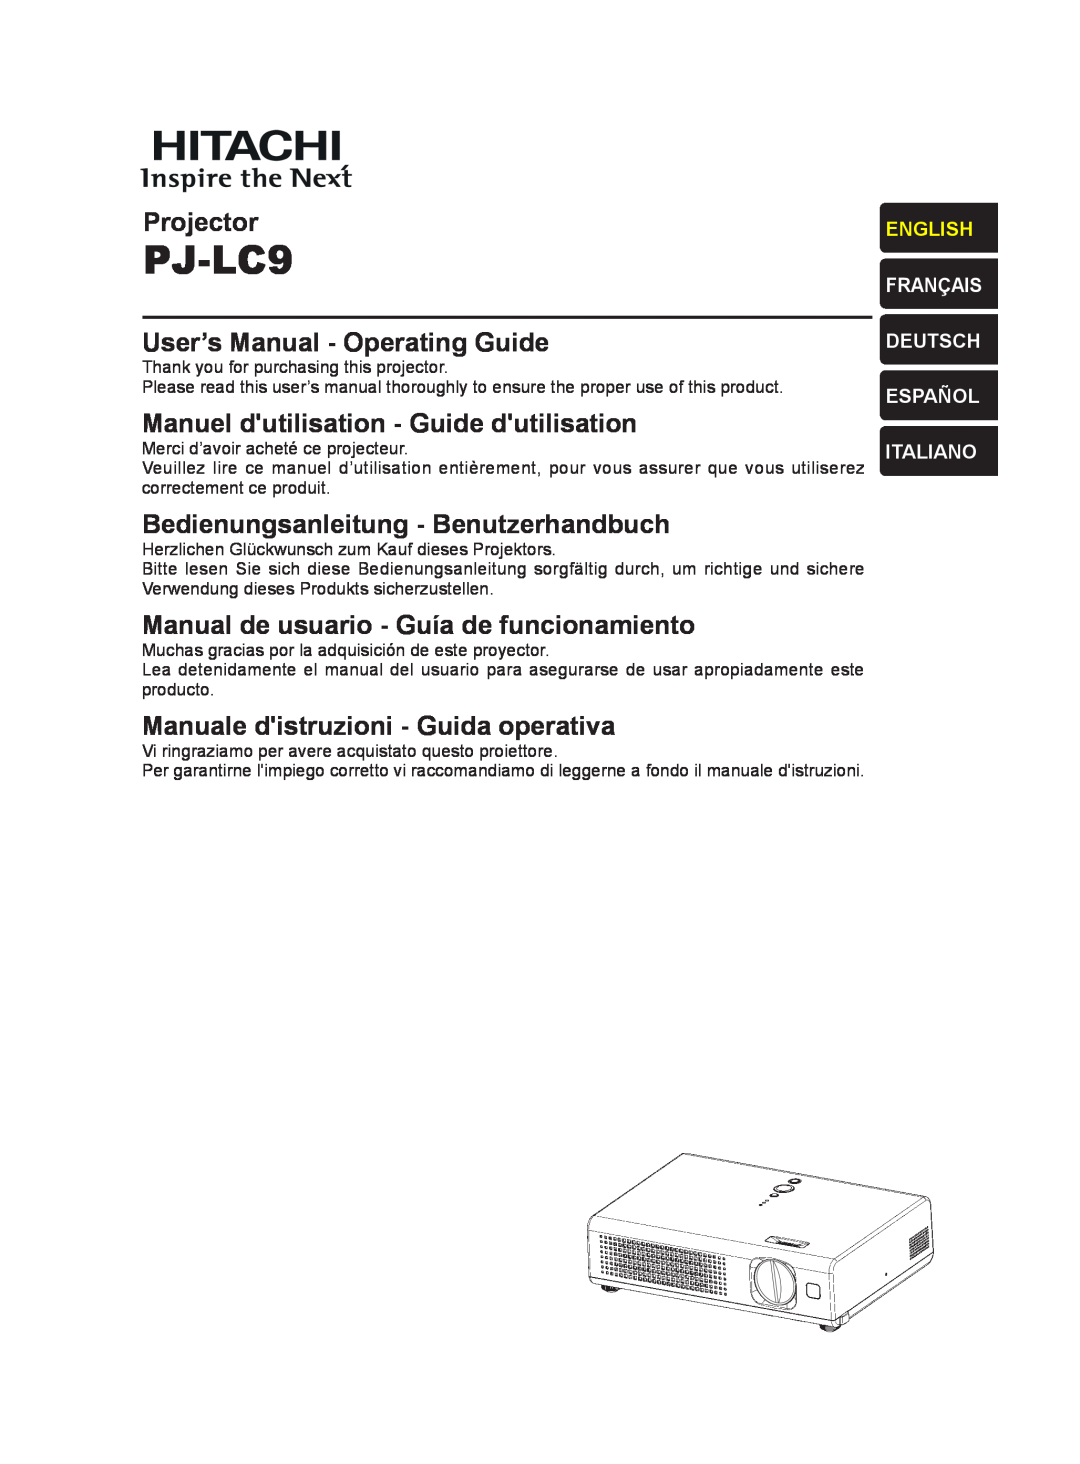 Hitachi PJ-LC9 user manual Projector, Manuel dutilisation - Guide dutilisation, Bedienungsanleitung - Benutzerhandbuch 